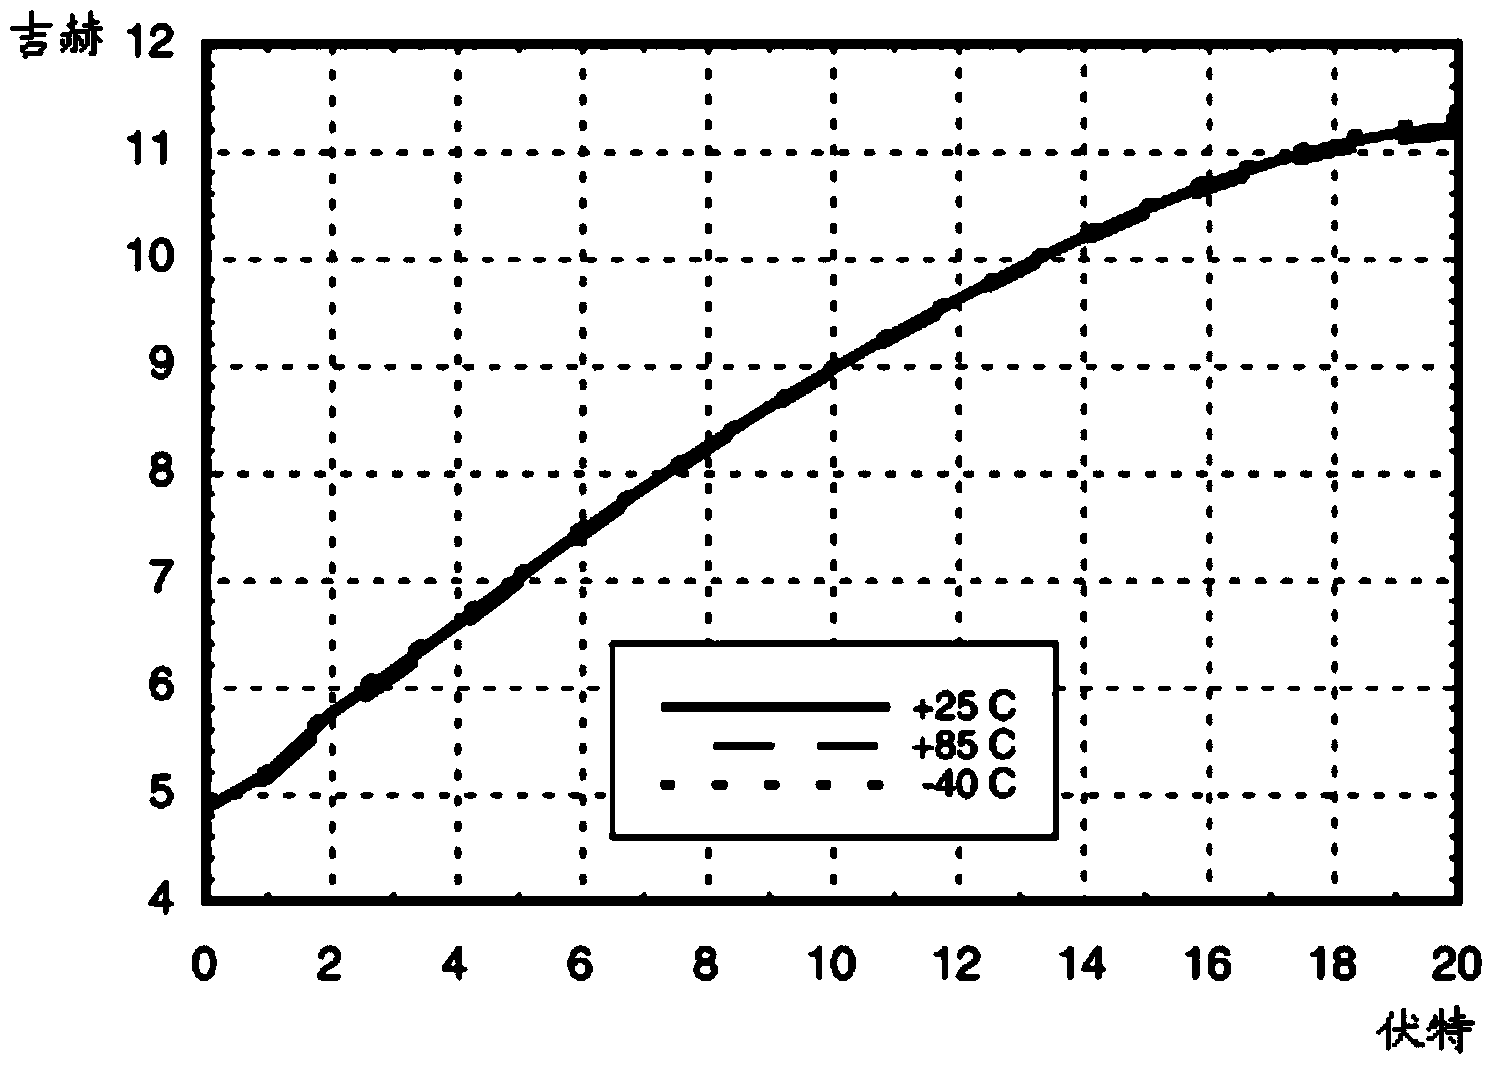 Phase-locked loop locking indication circuit and phase-locked loop